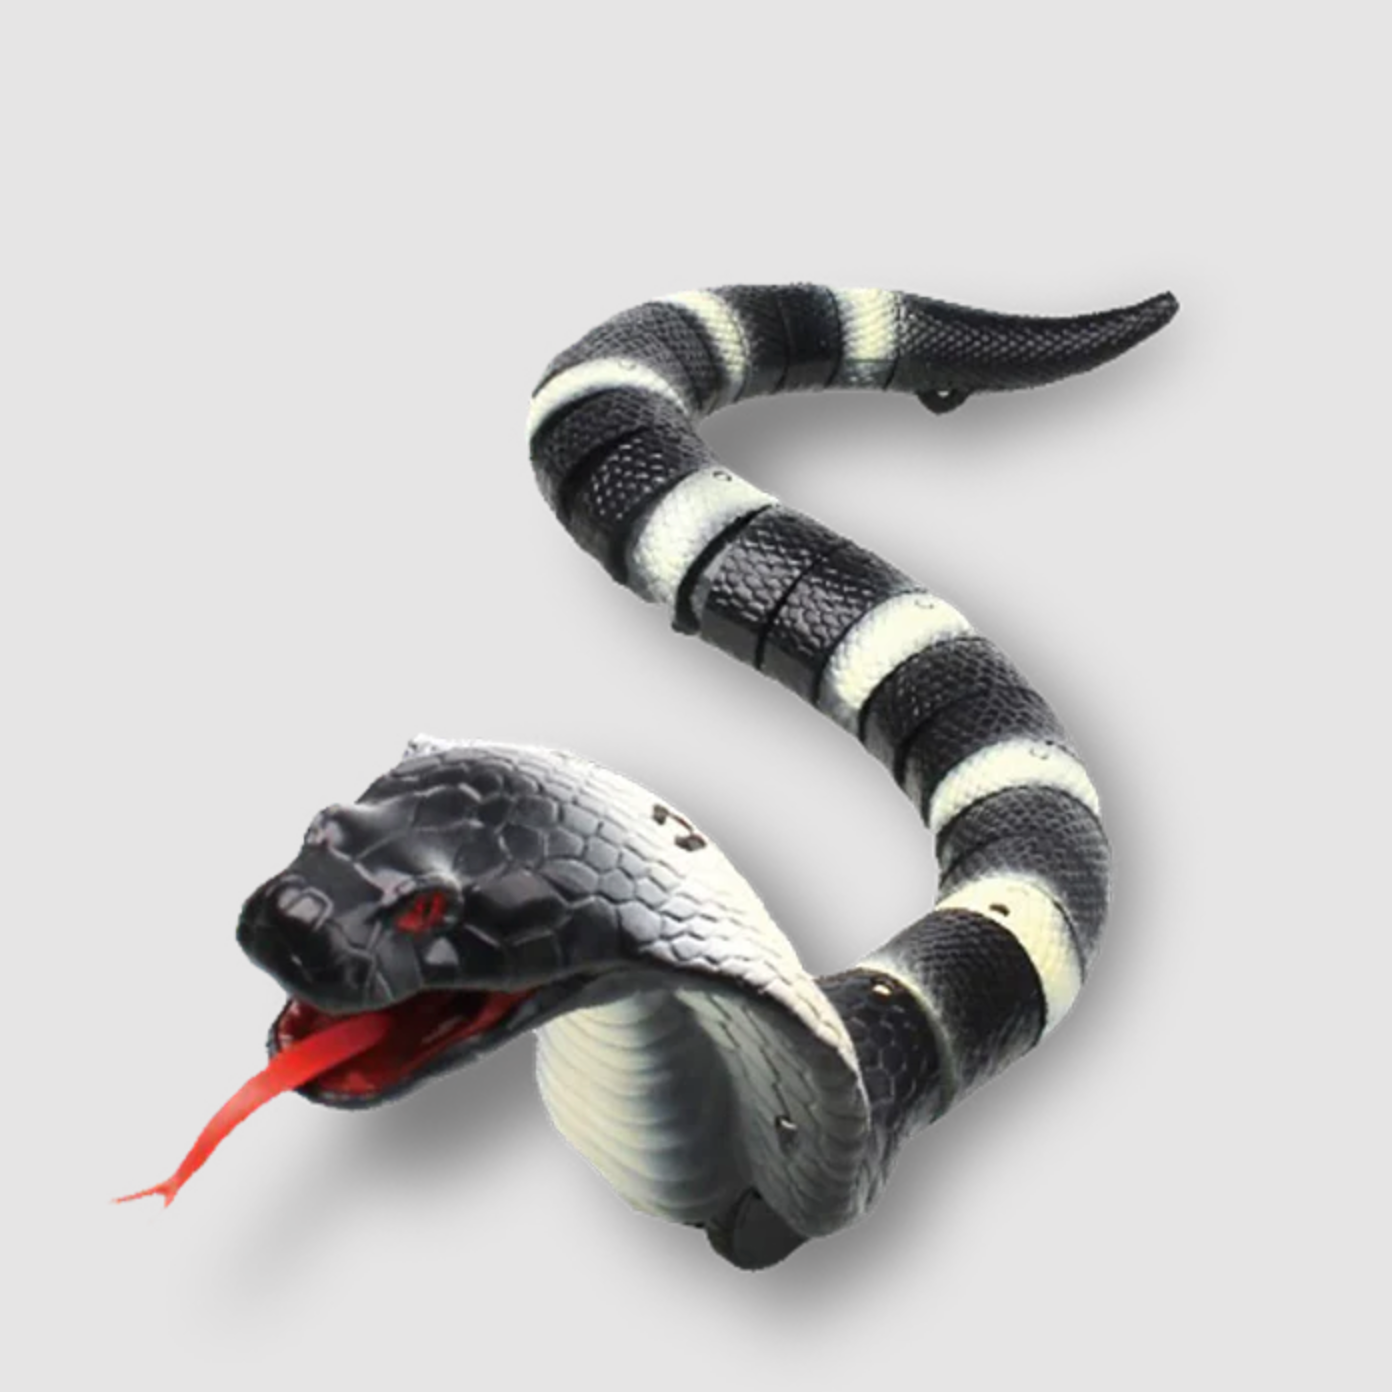 Slither Snake